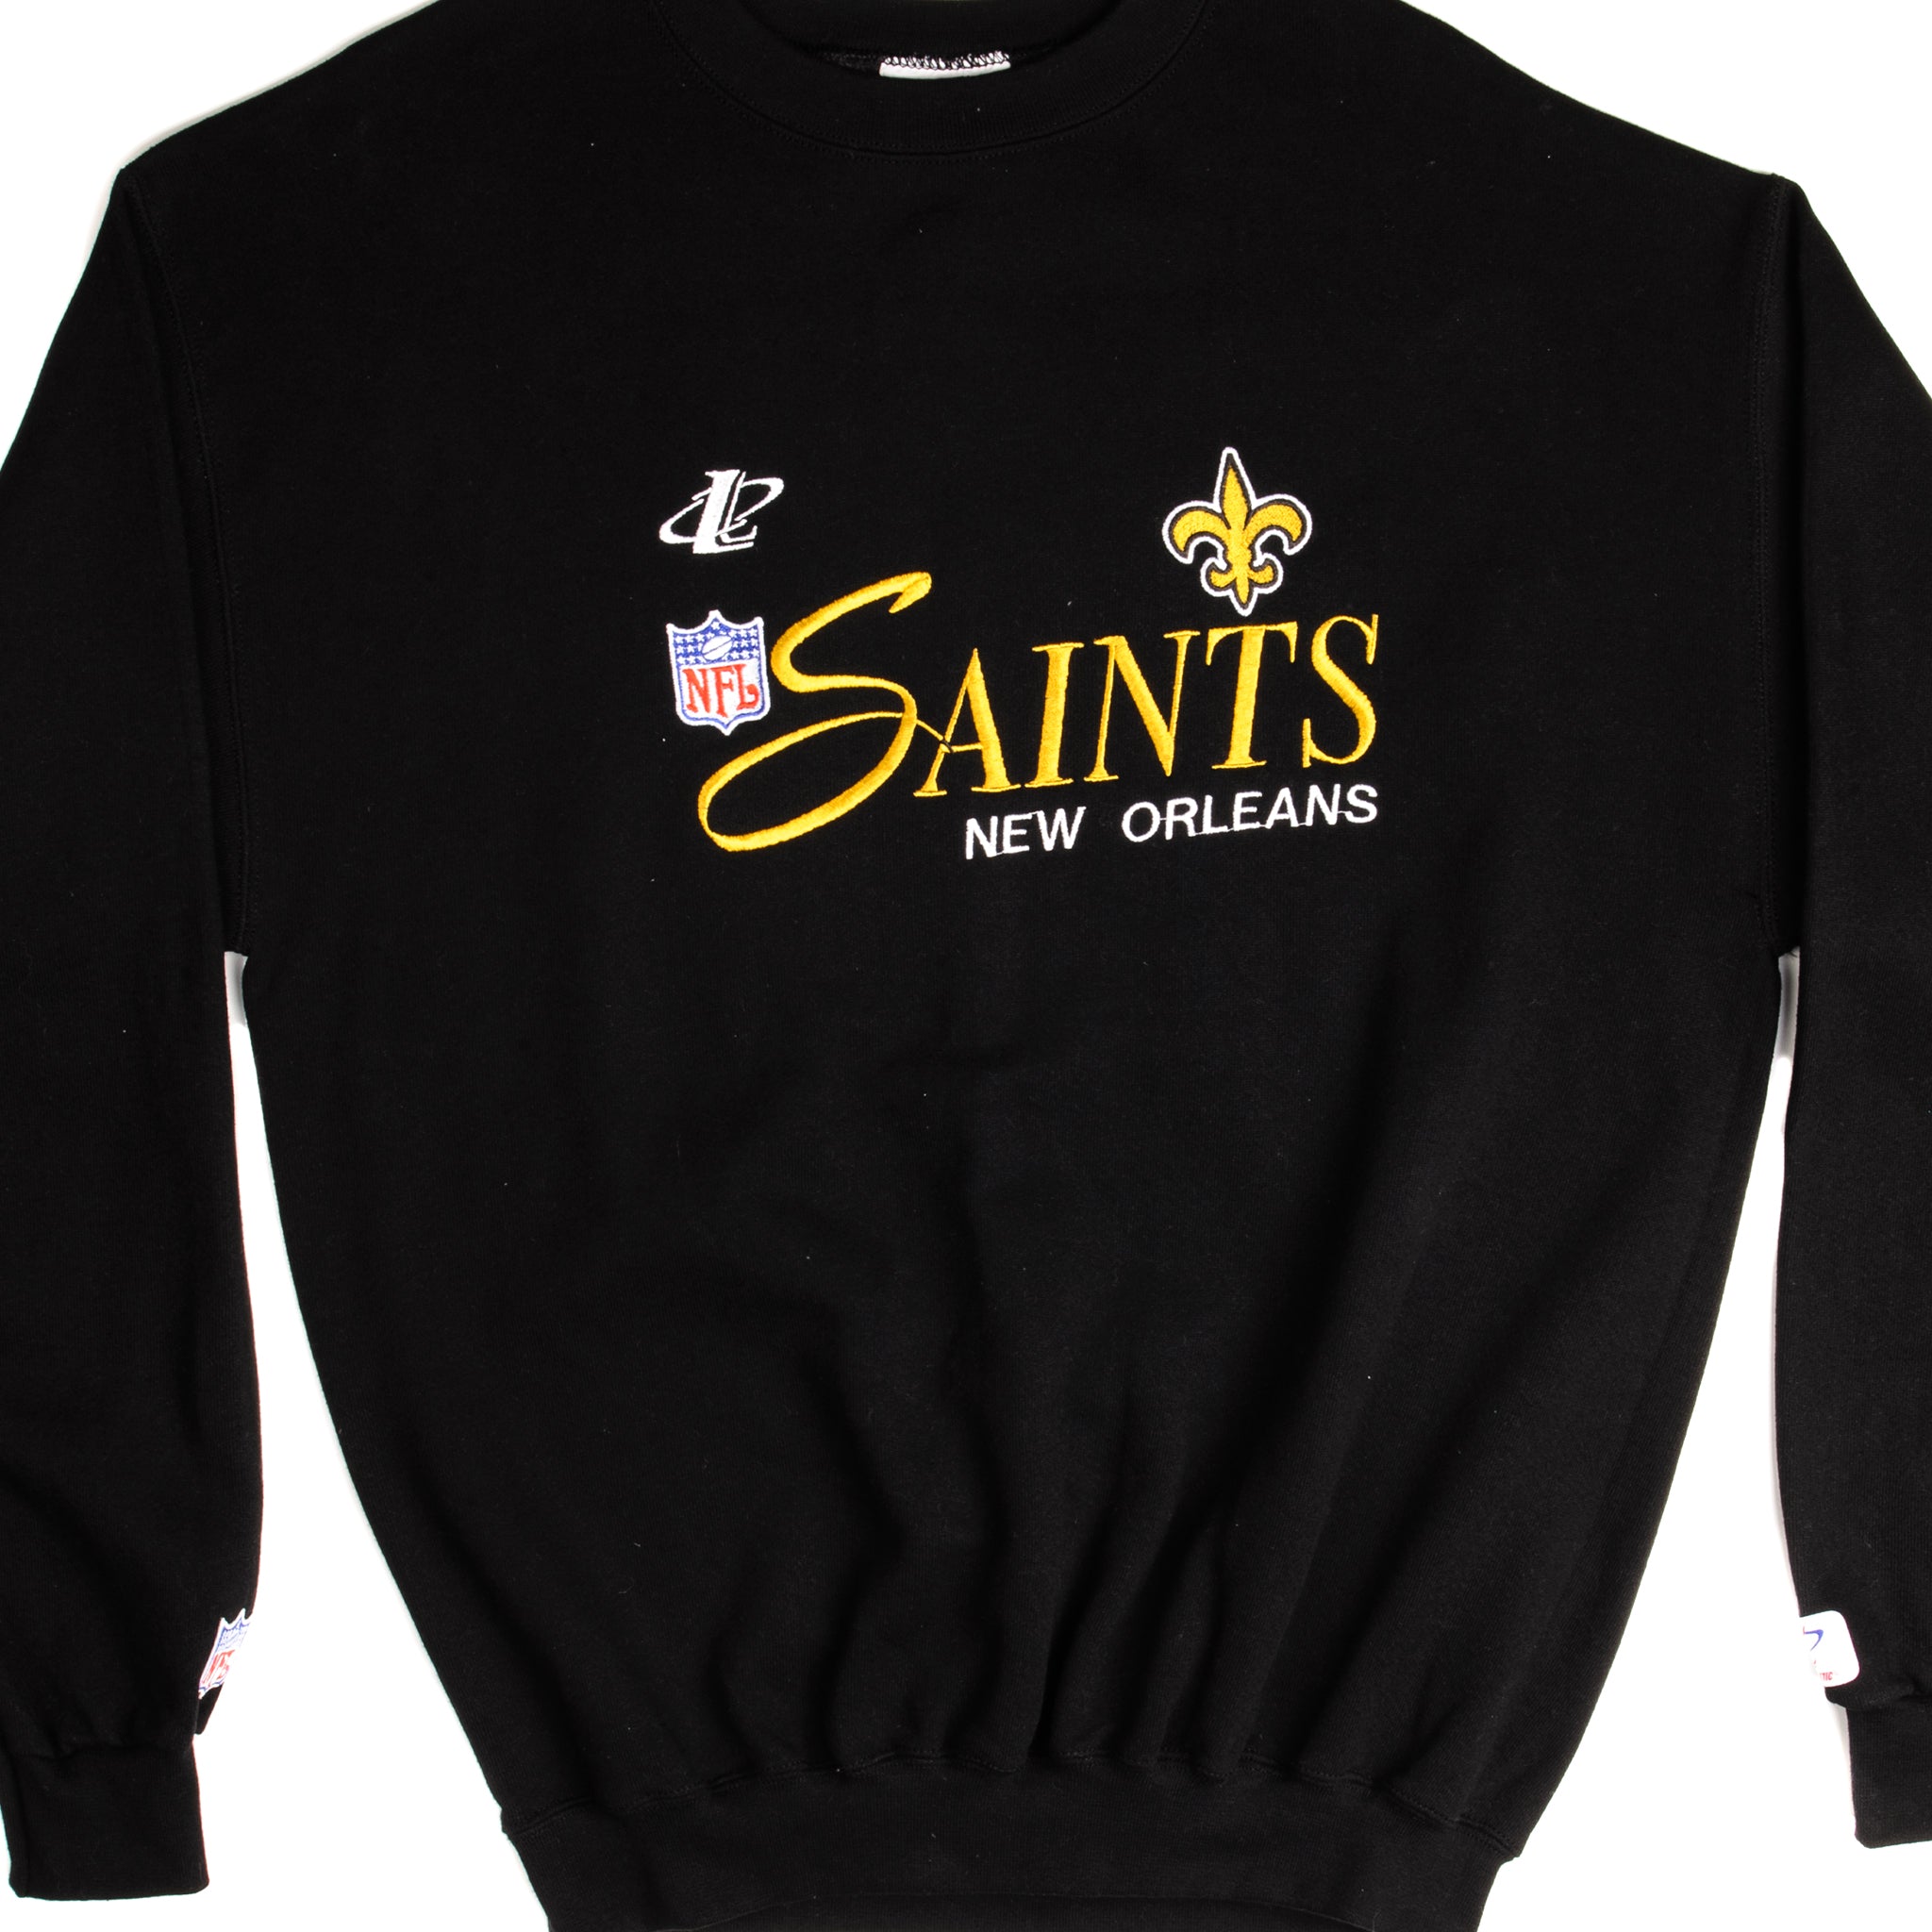 Sports / College Vintage NFL New Orleans Saints Sweatshirt Size Medium Made in USA Deadstock